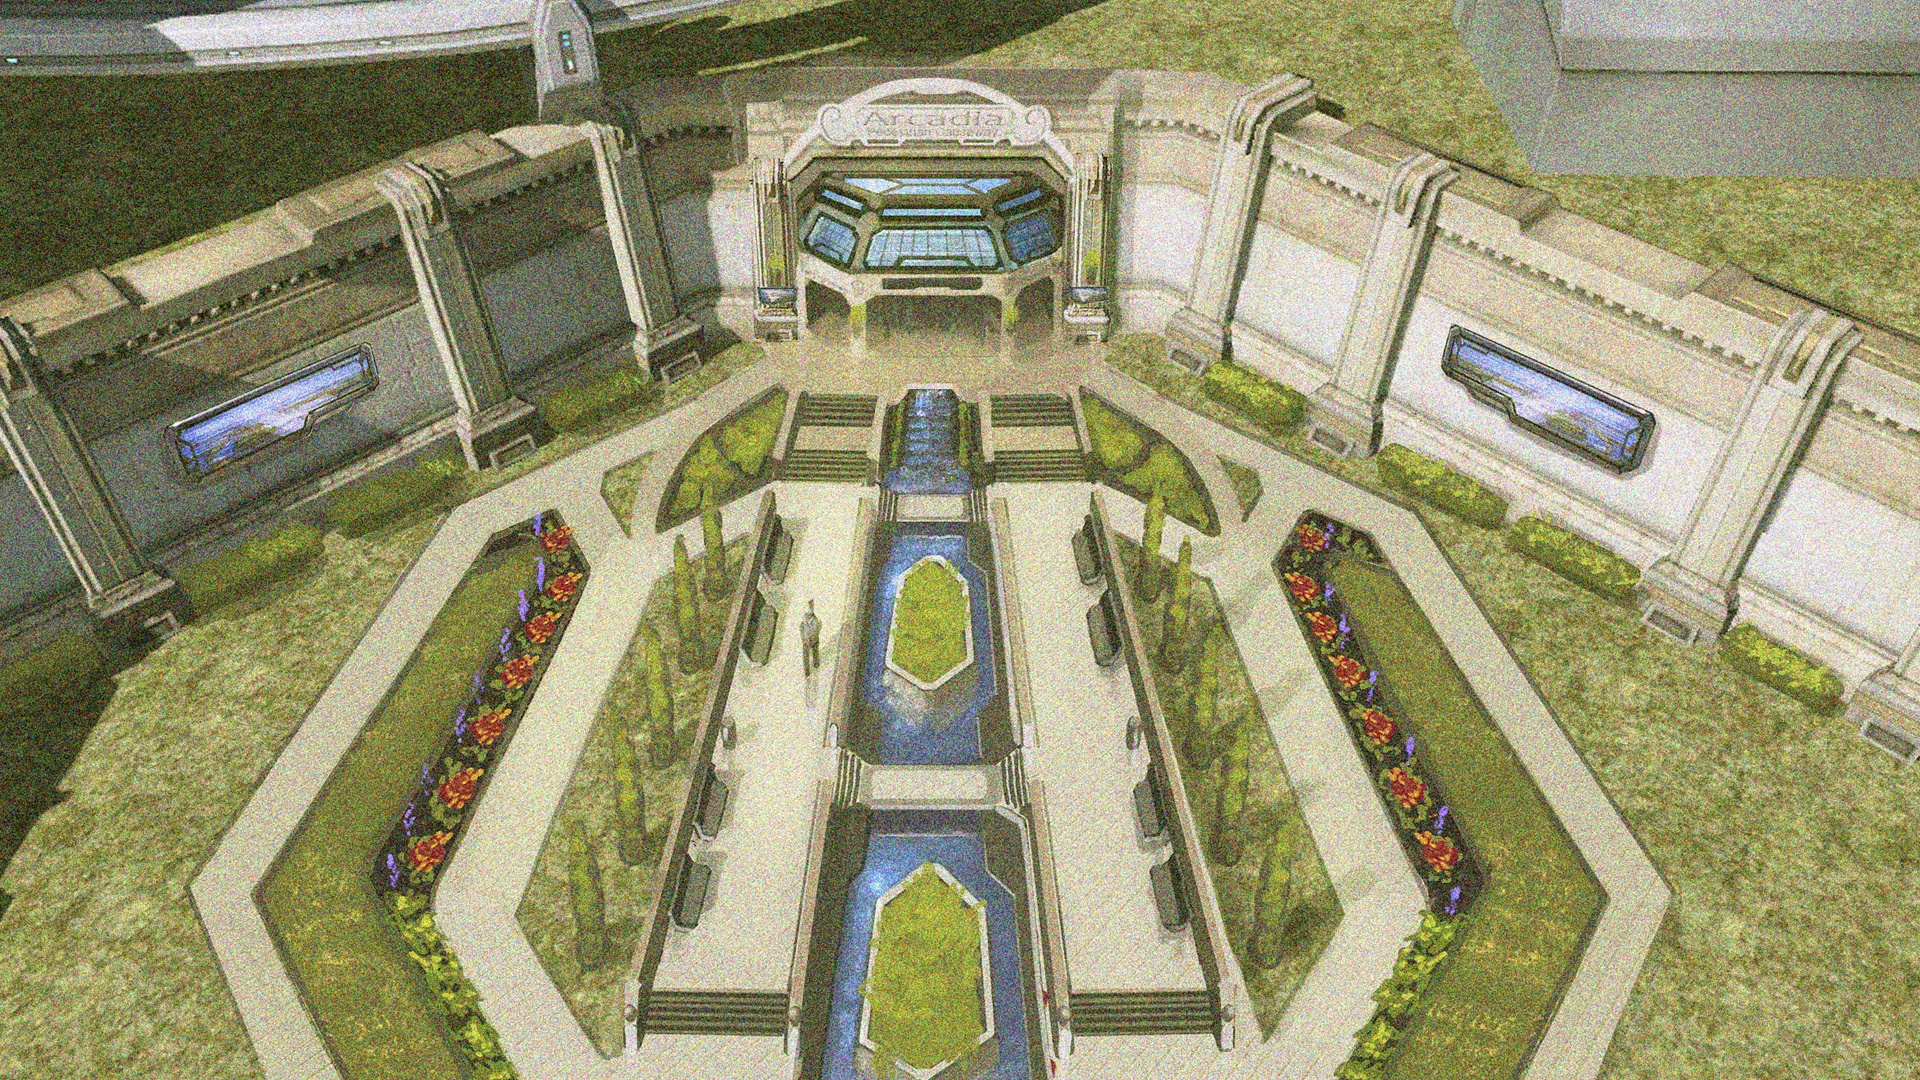 Halo Wars concept art of gardens on Arcadia